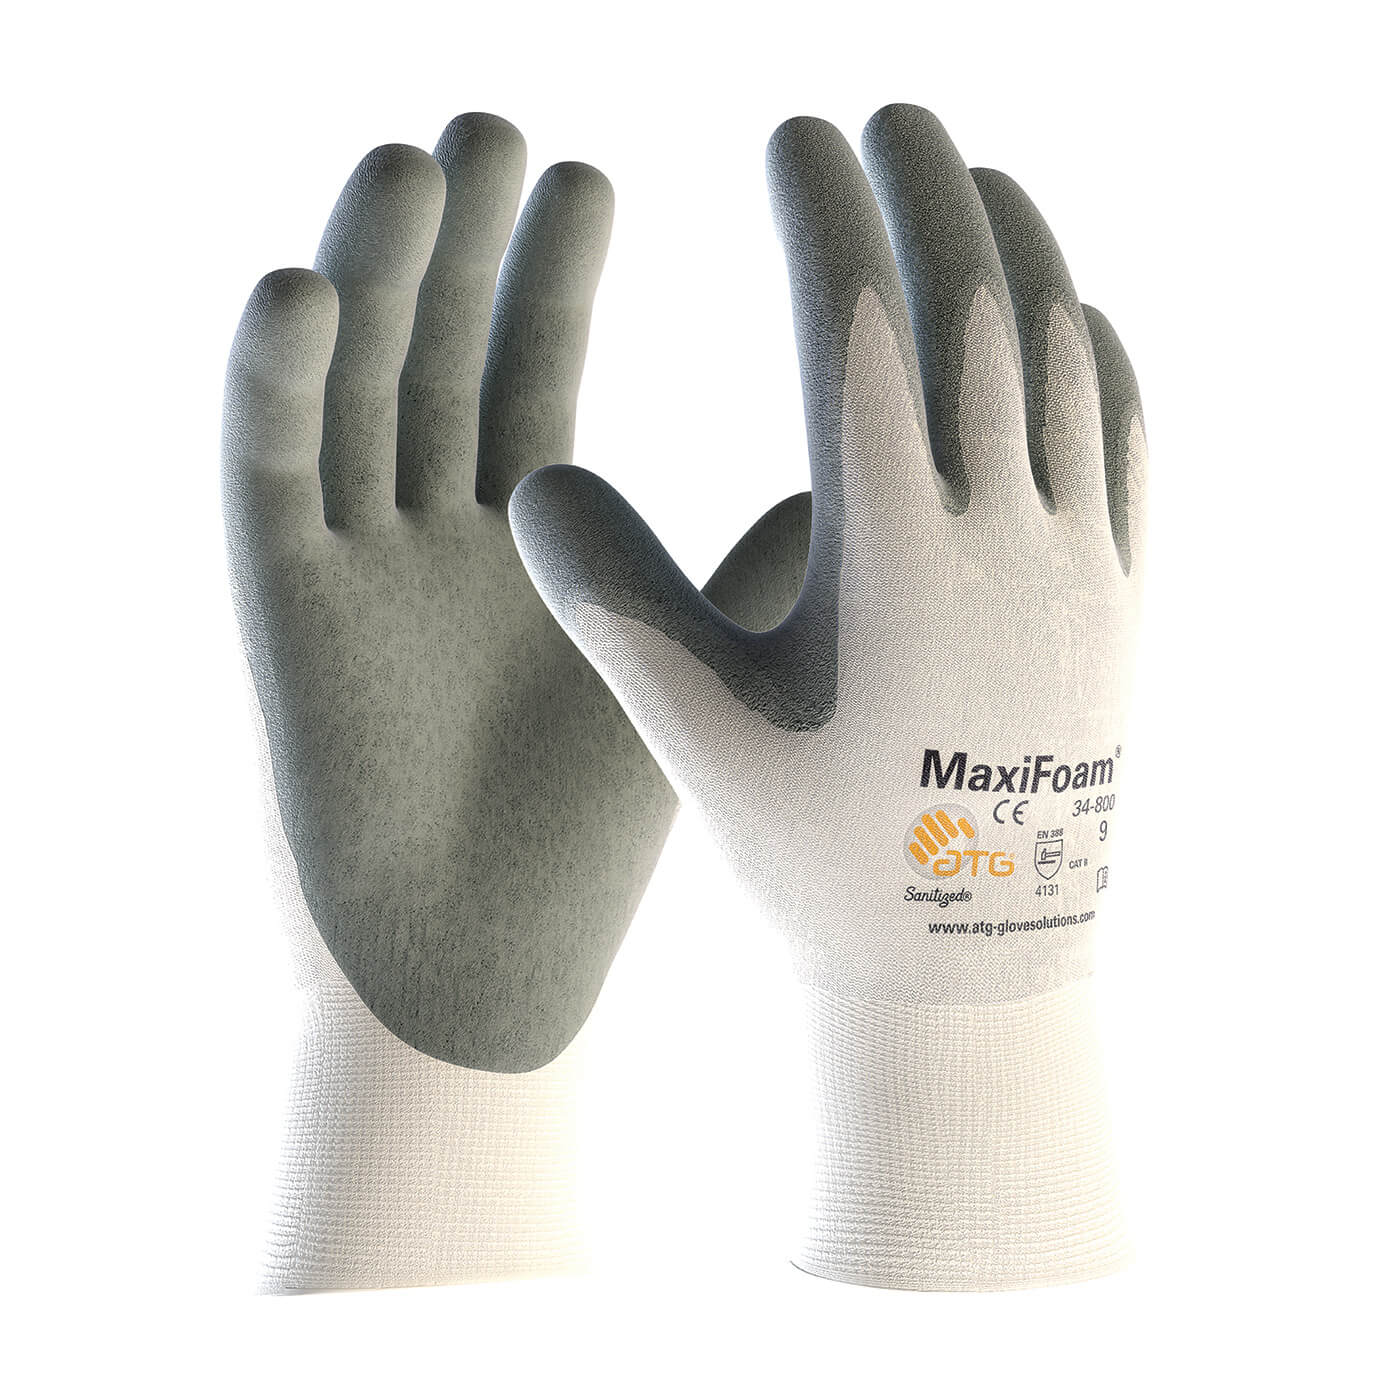 MaxiFoam Premium 34-800 Nitrile coated work gloves